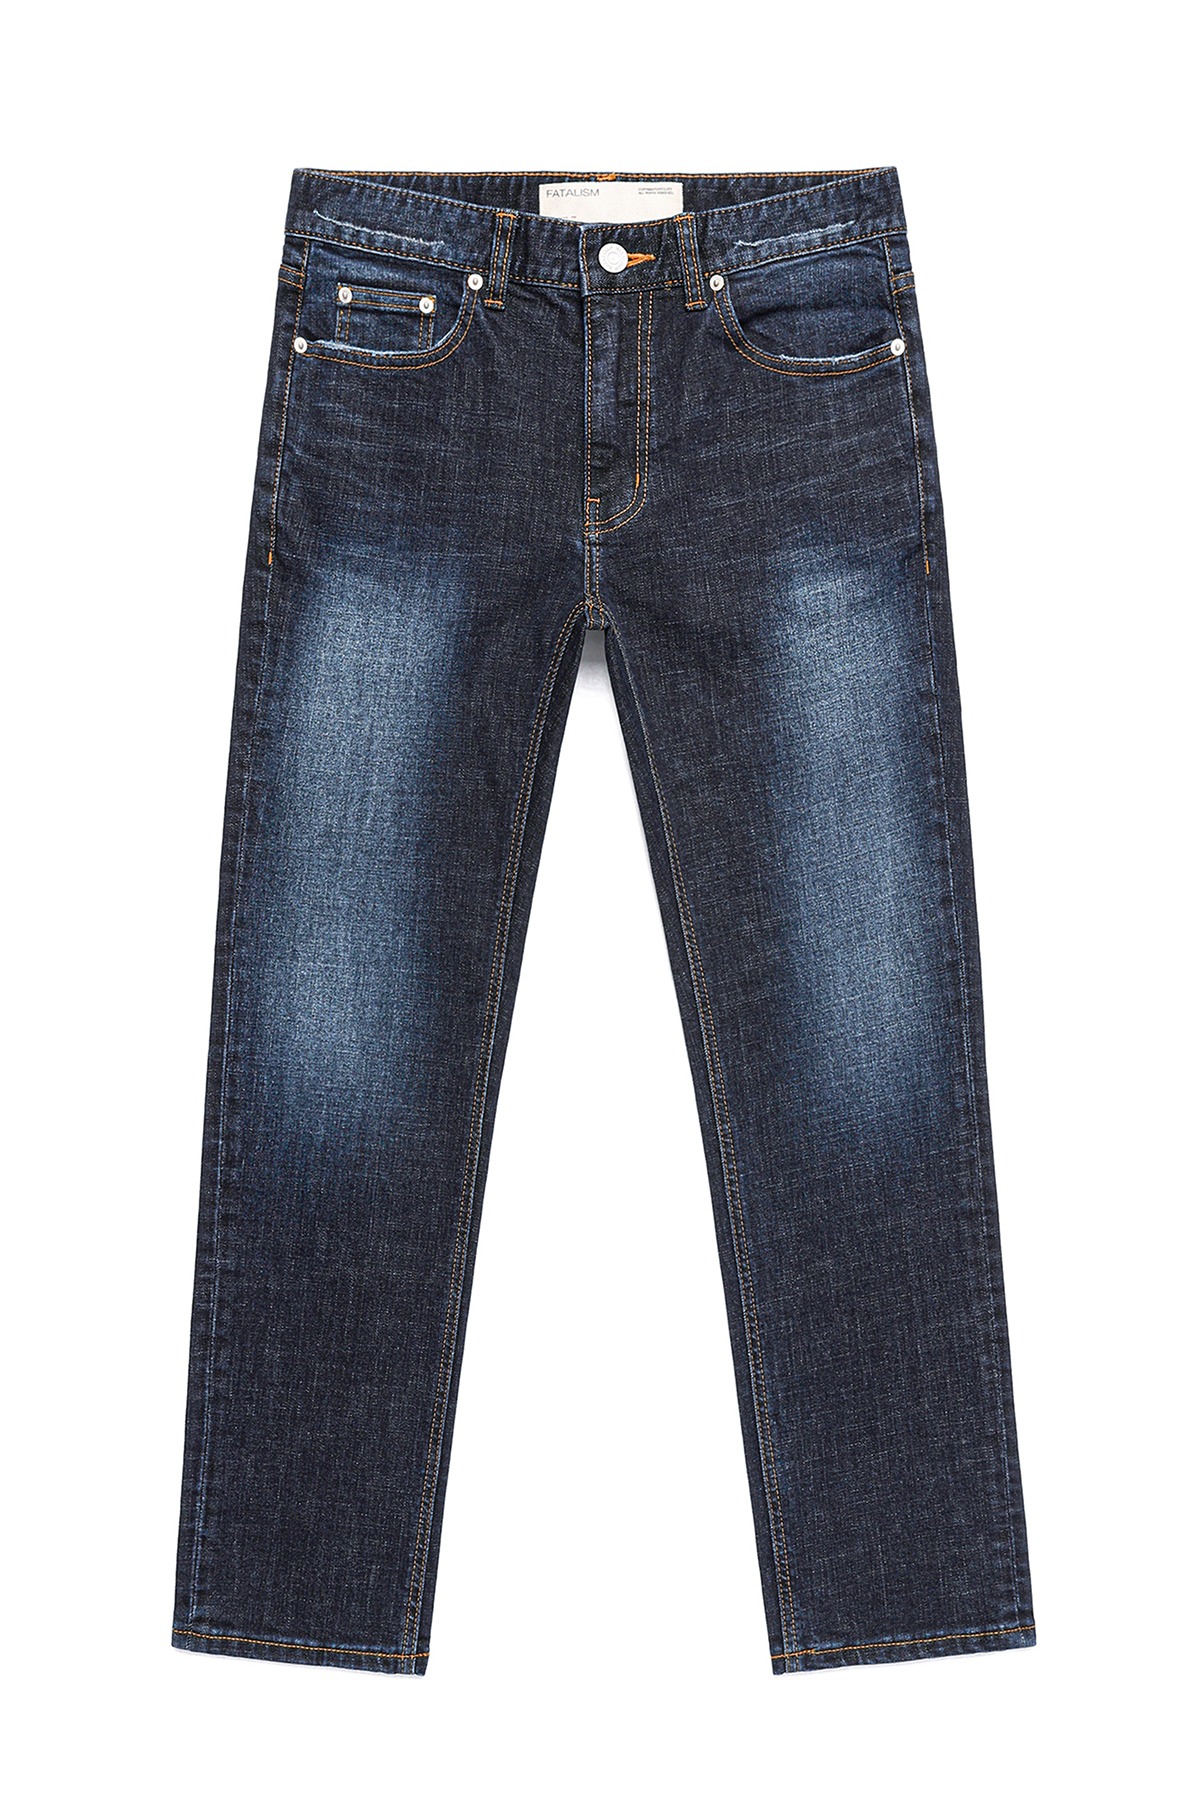 #0083B Dude blue washed crop jeans (un cutting)